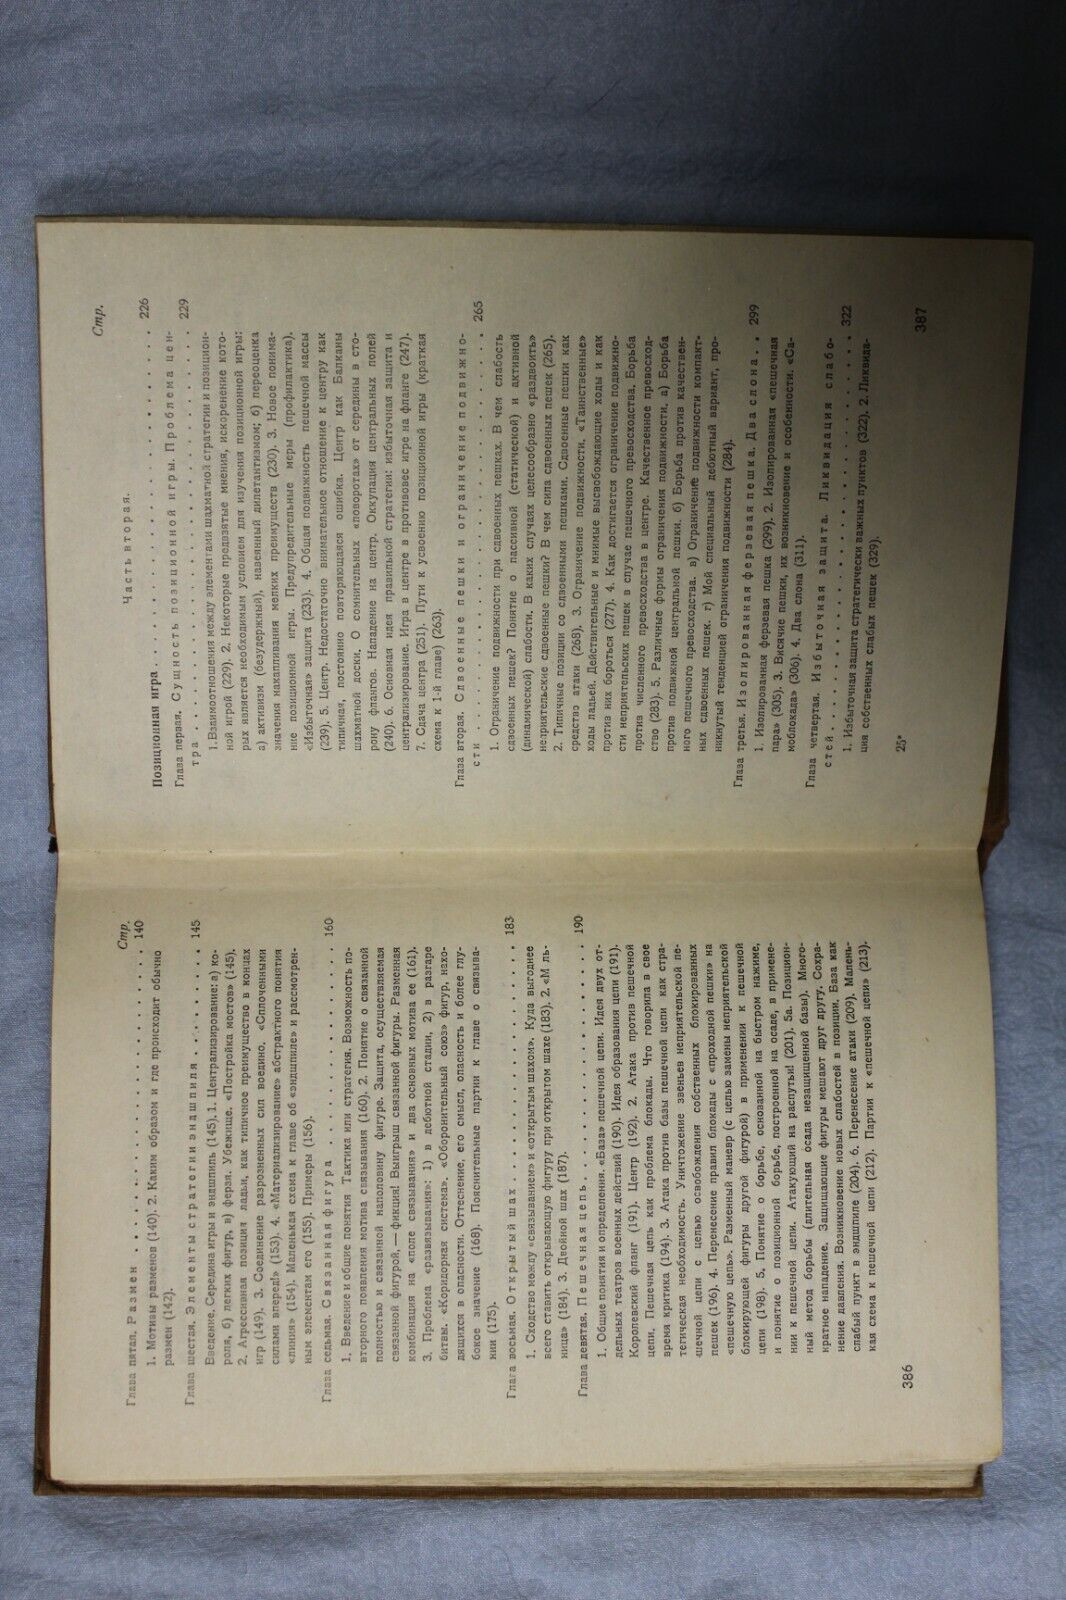 11103.Chess book: Praying System, A. Nimzowitz, Moscow - Leningrad, 1930